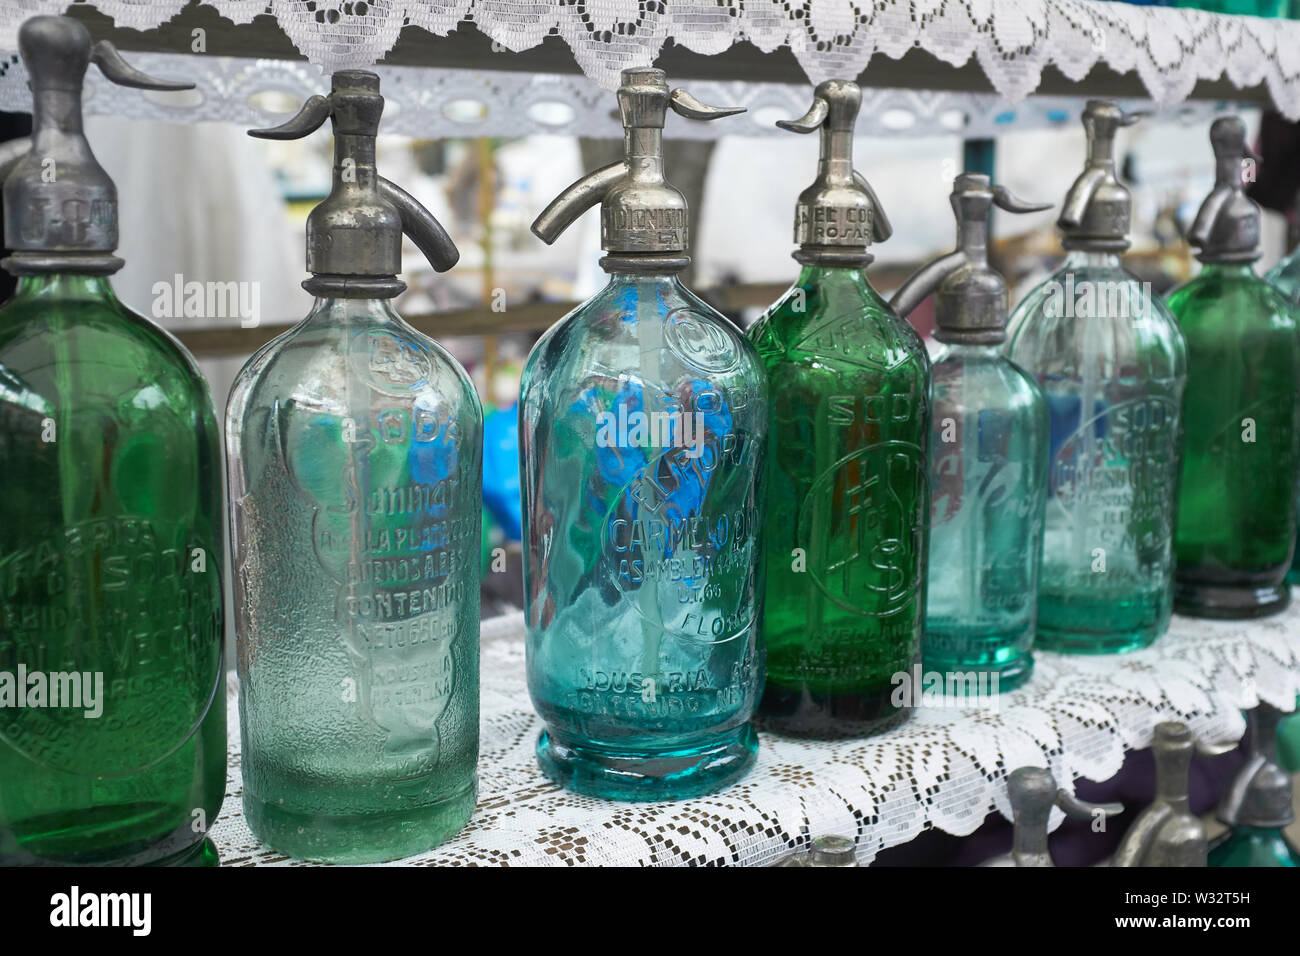 Antique siphon bottles in Mercado de San Telmo, the oldest neighbourhood of Buenos Aires, Argentina. Stock Photo